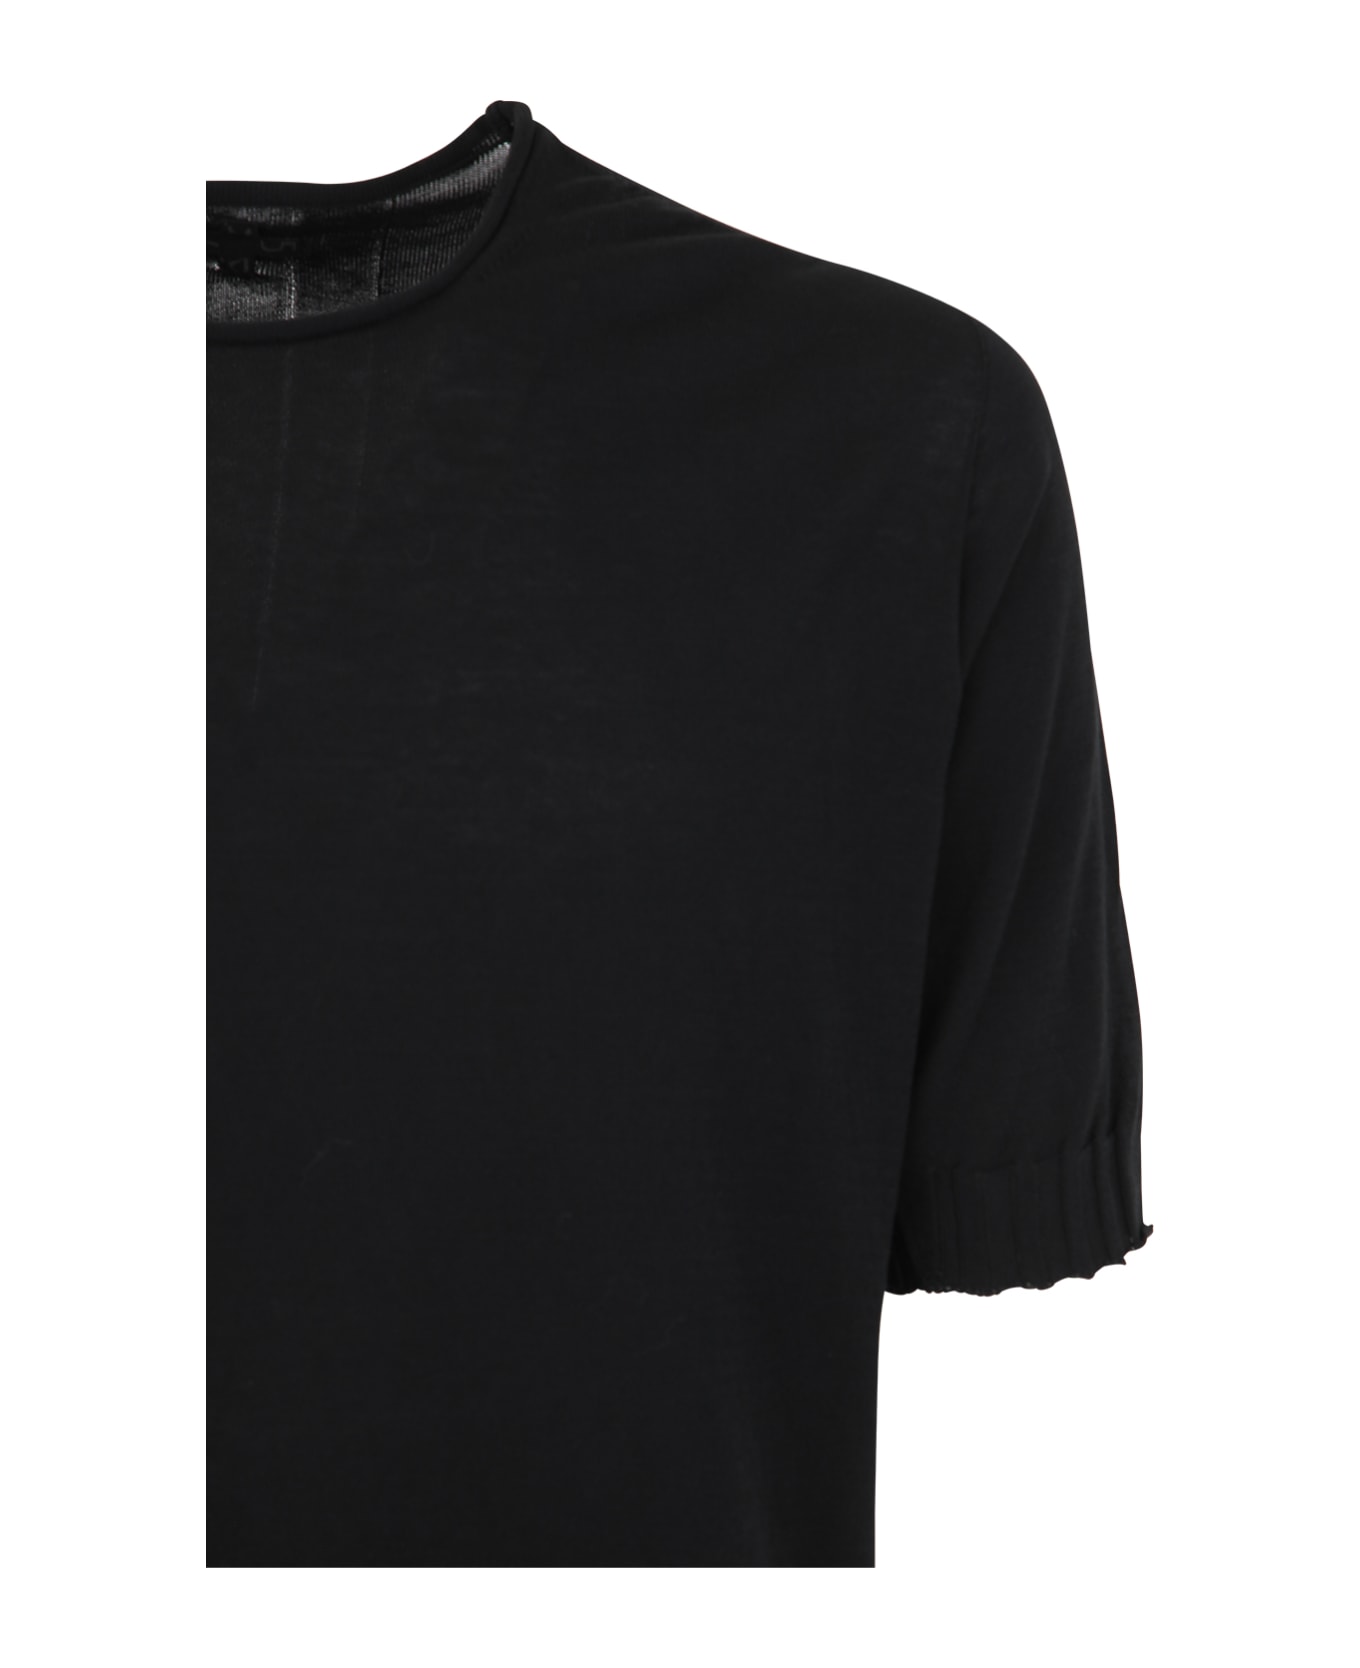 MD75 Round Neck Pullover - Basic Black